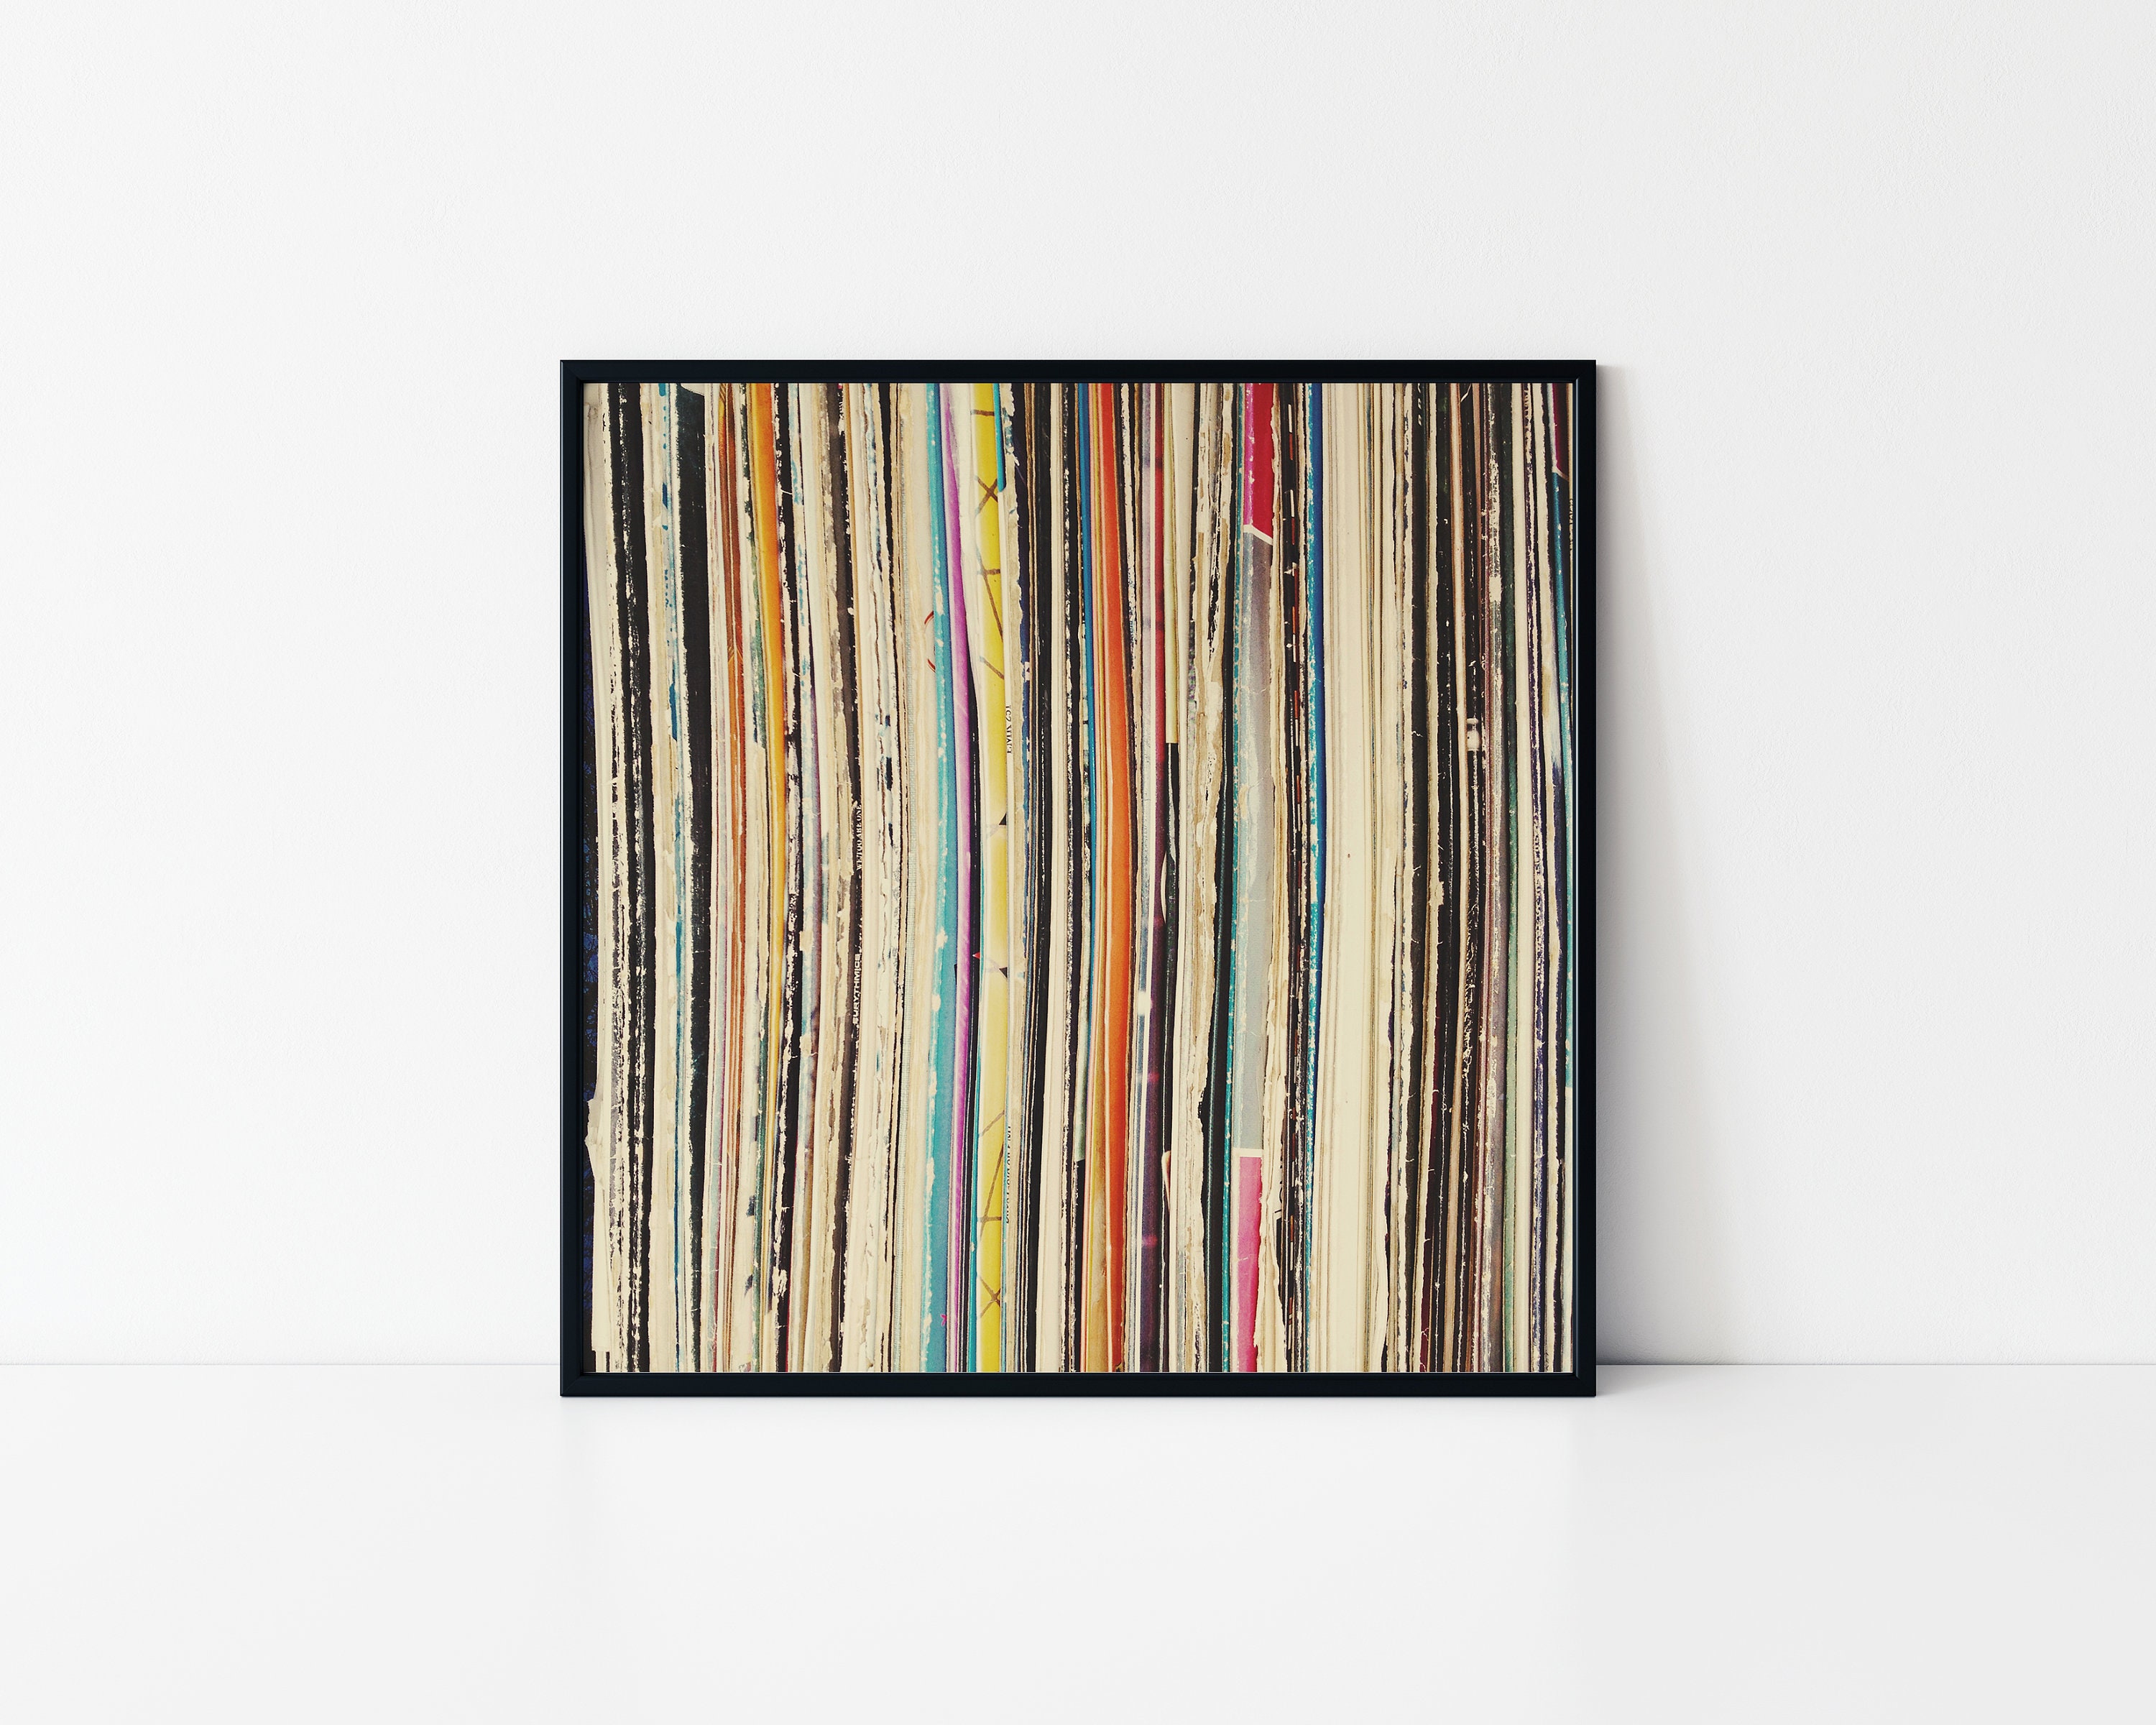 Vinyl Record Art, Music Wall Art, Retro Wall Decor Vinyl